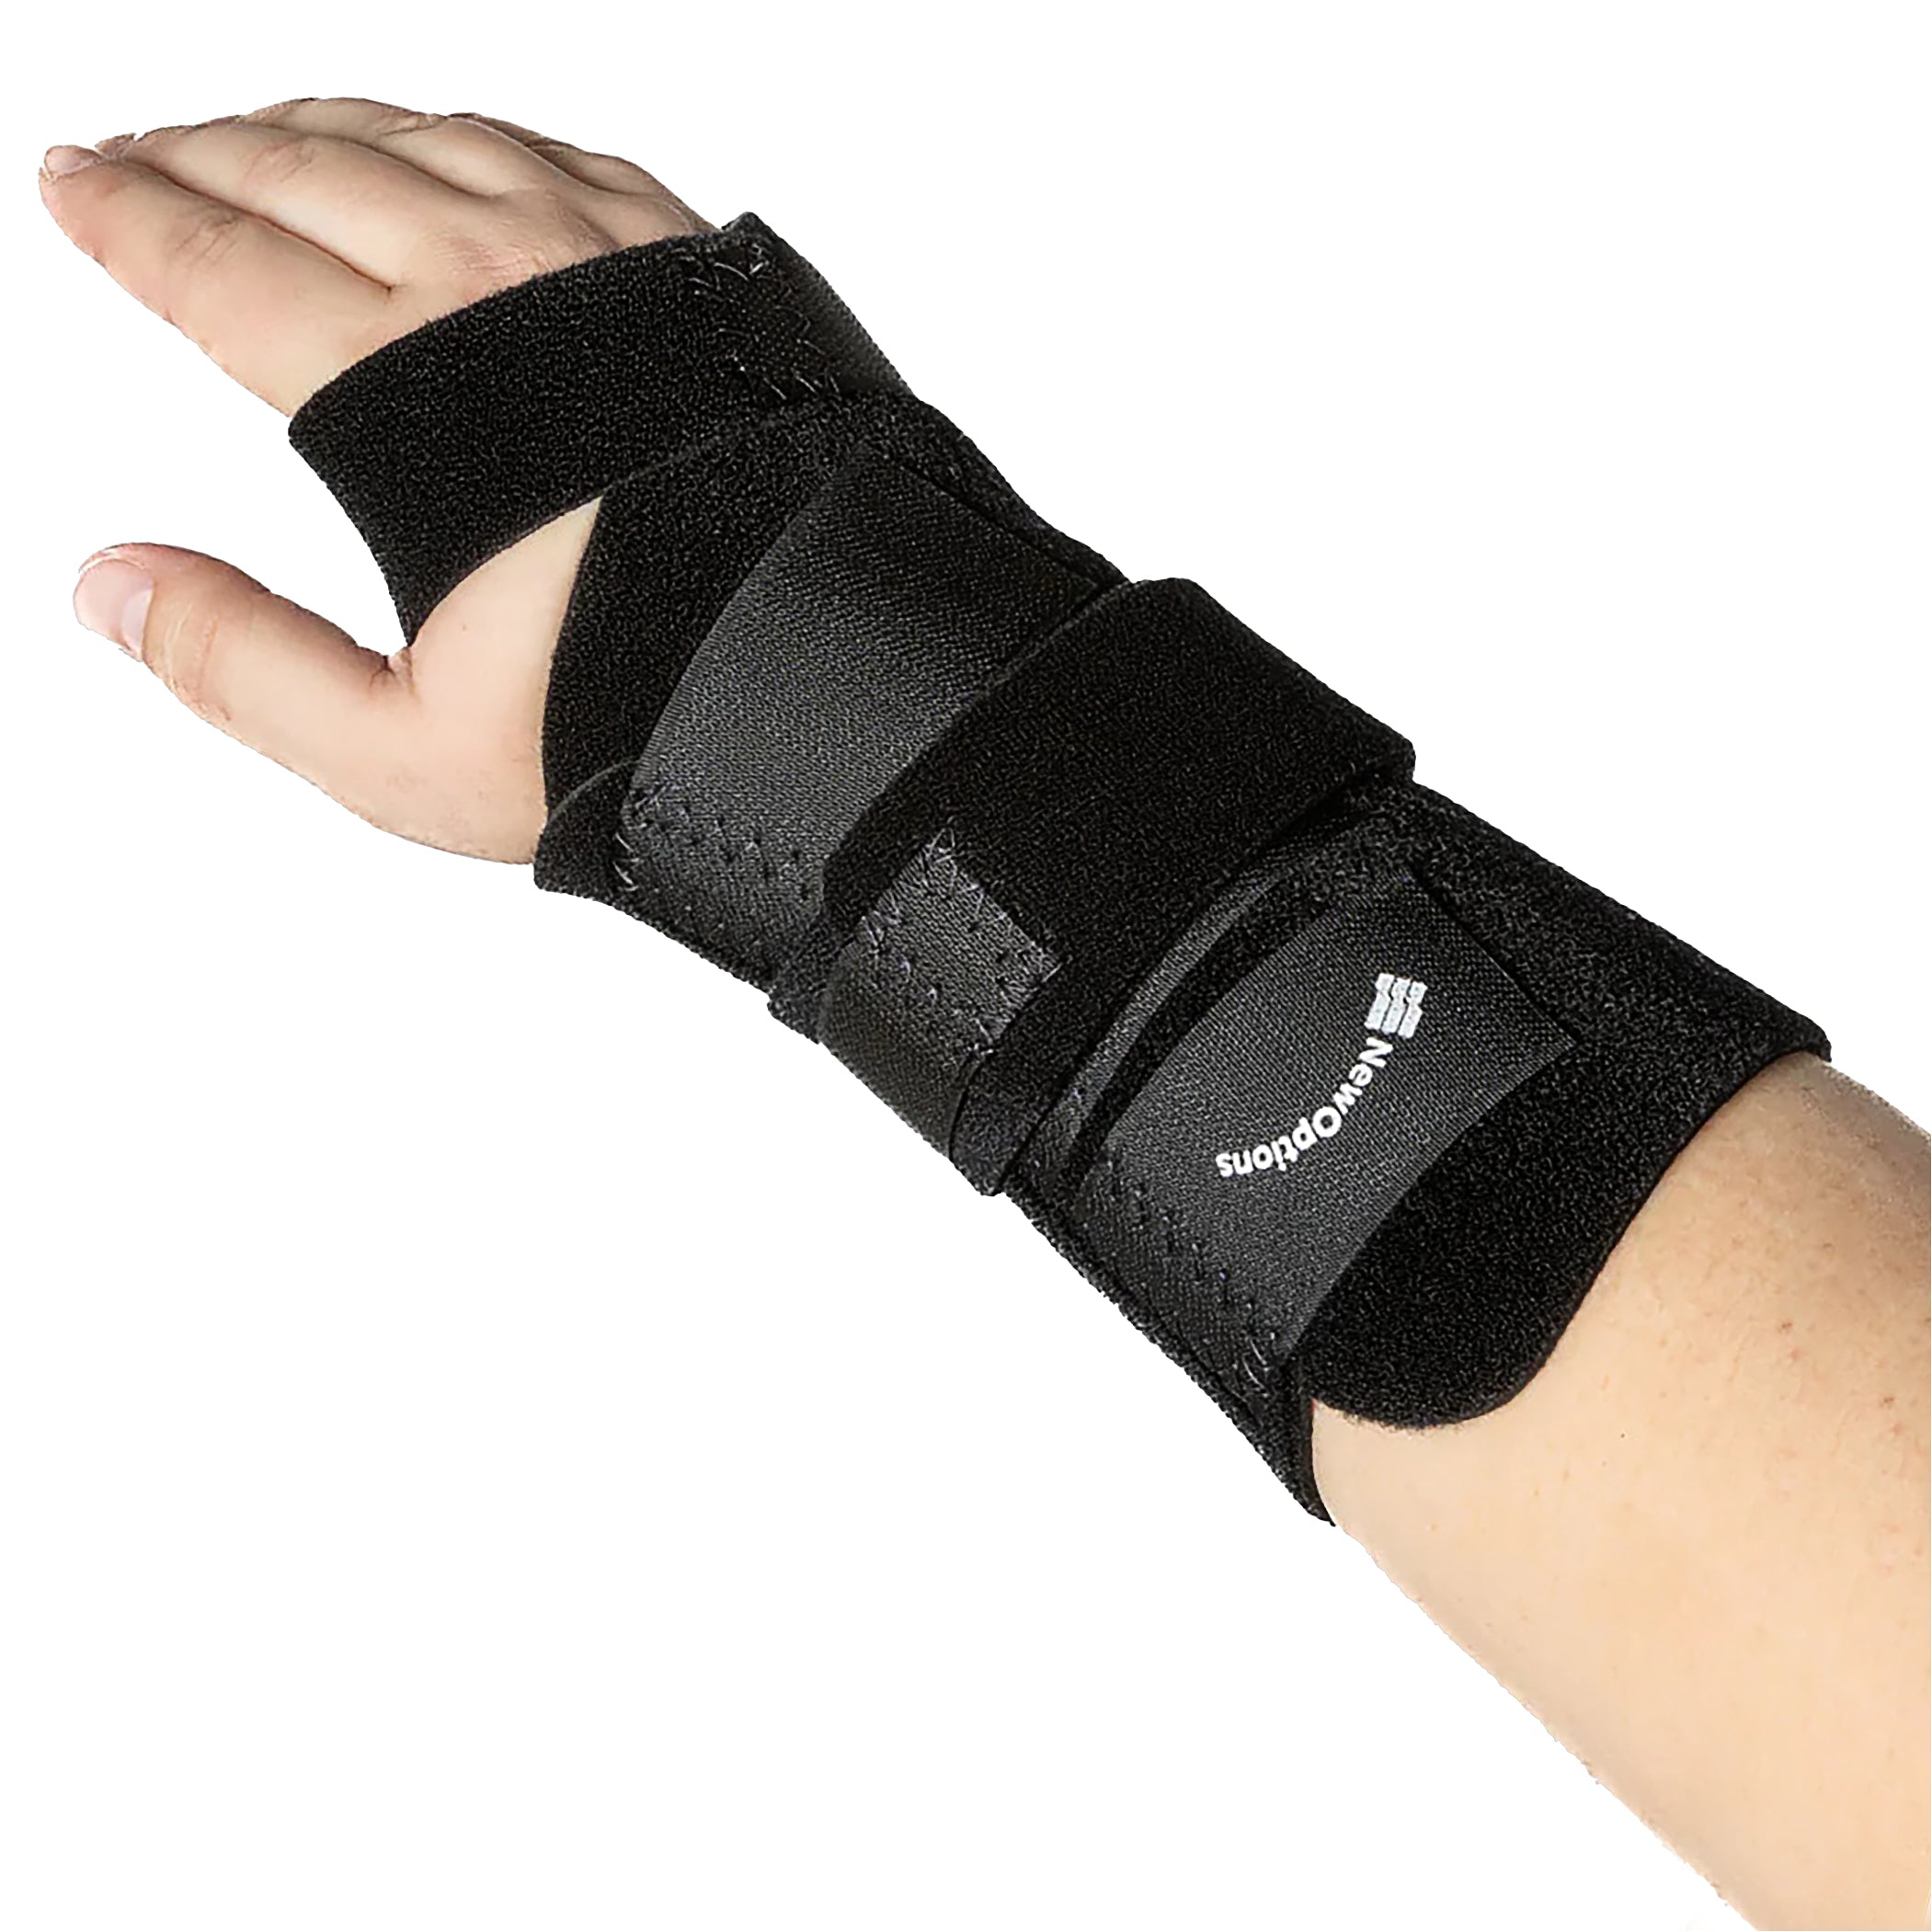 Wrist Support. W20/28 Universal Size Wrist Support.